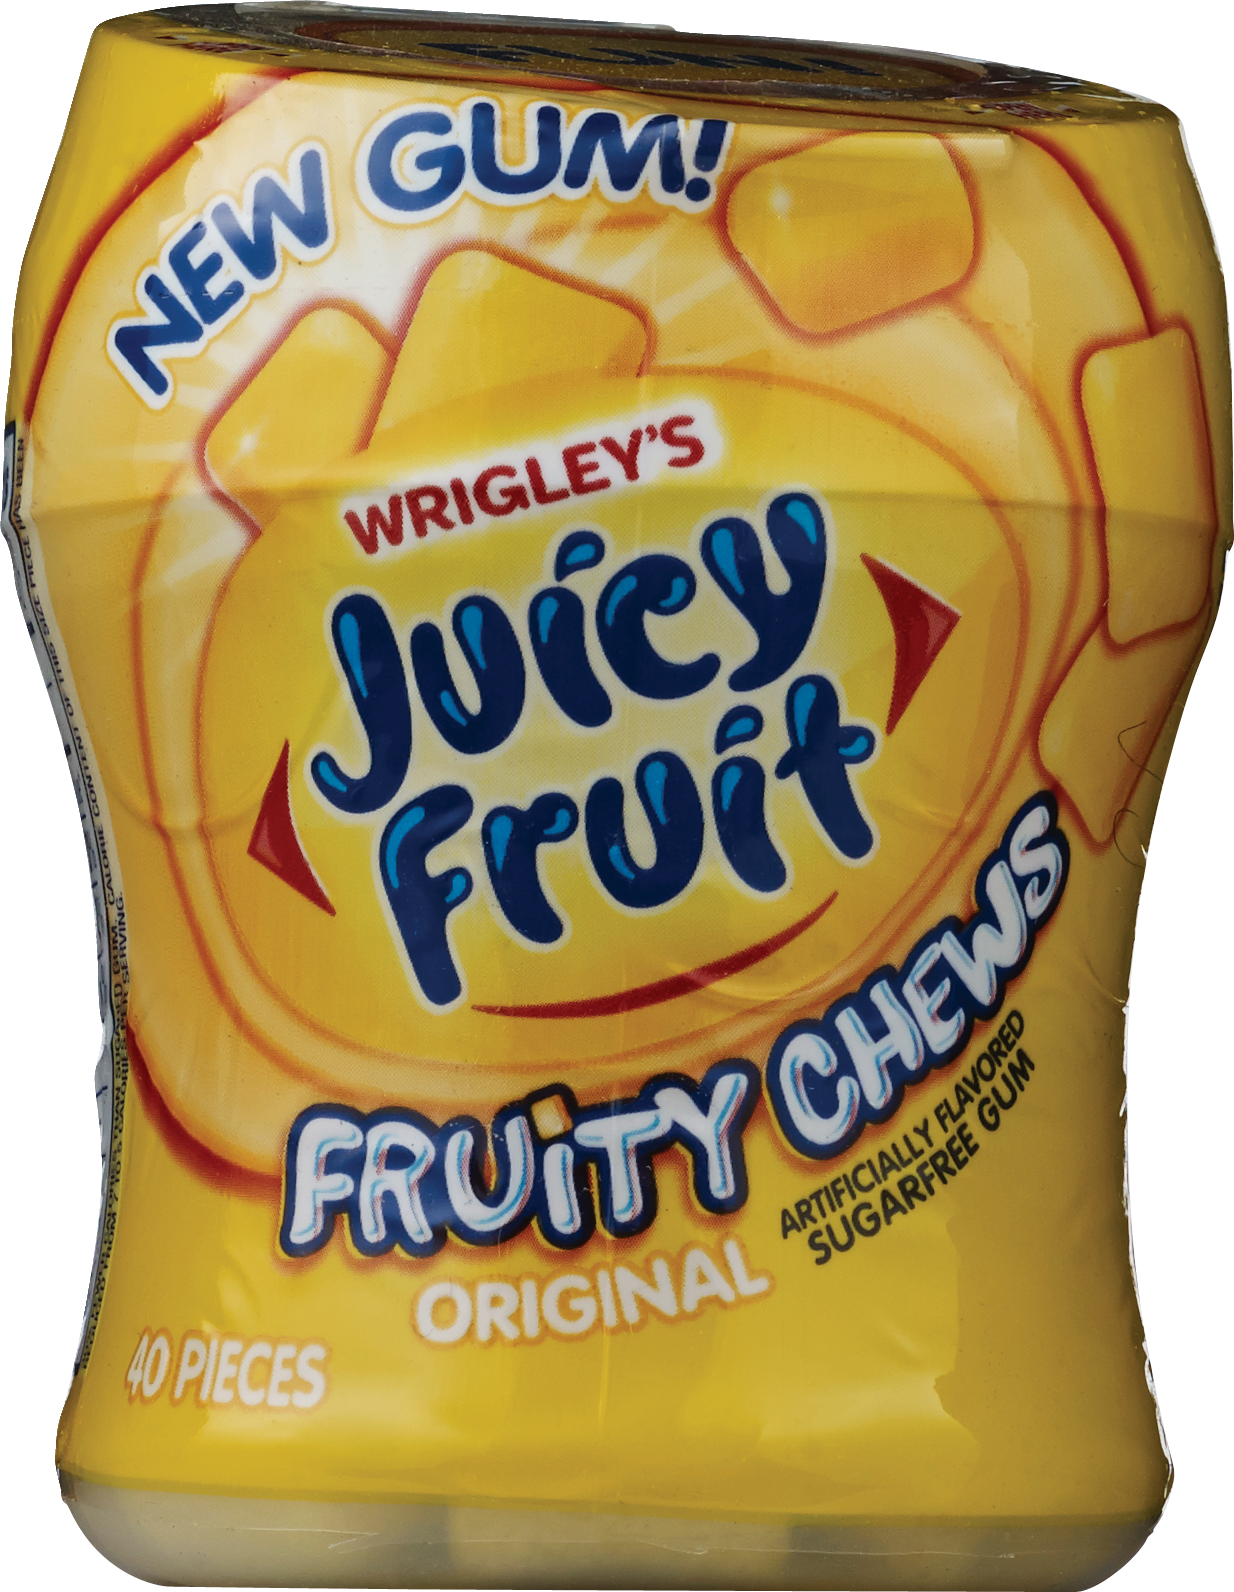 Juicy Fruit Original Sugarfree Fruity Chews Gum, 40 ct